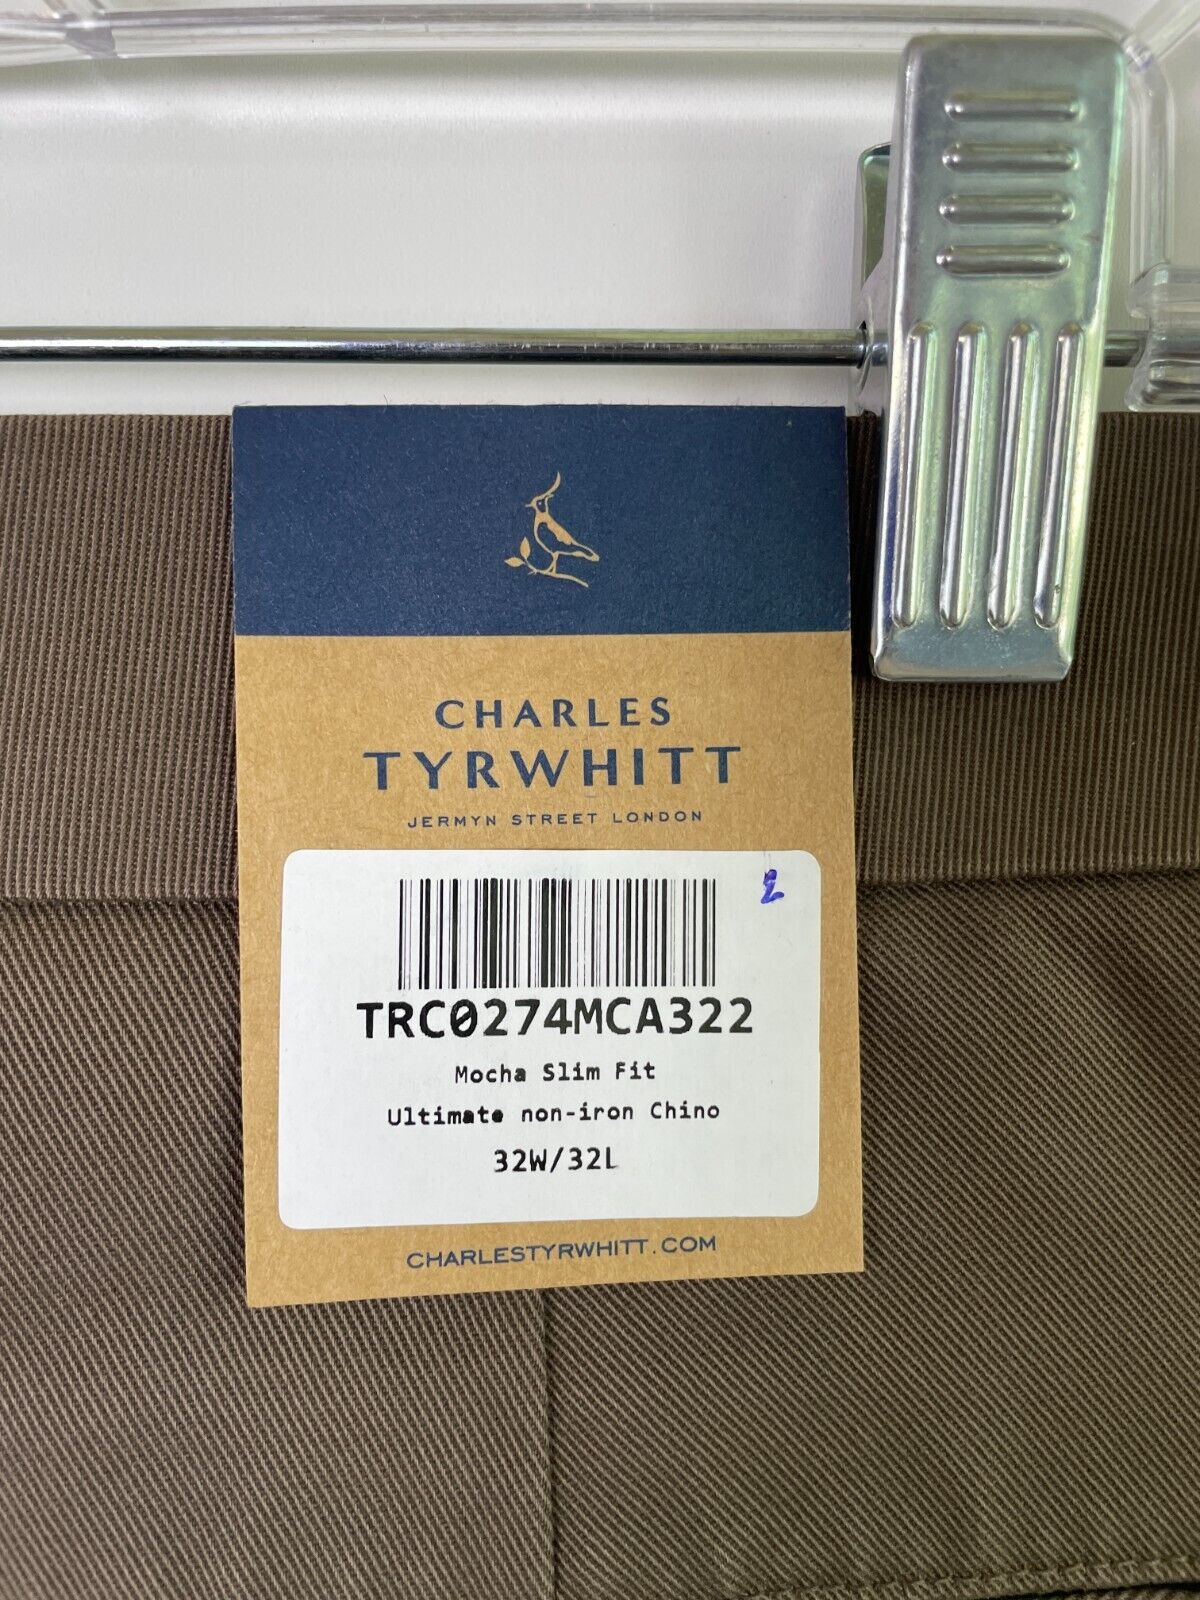 Charles Tyrwhitt Mens 32W/32L Ultimate Non-Iron Chinos Mocha Brown Pants Khaki